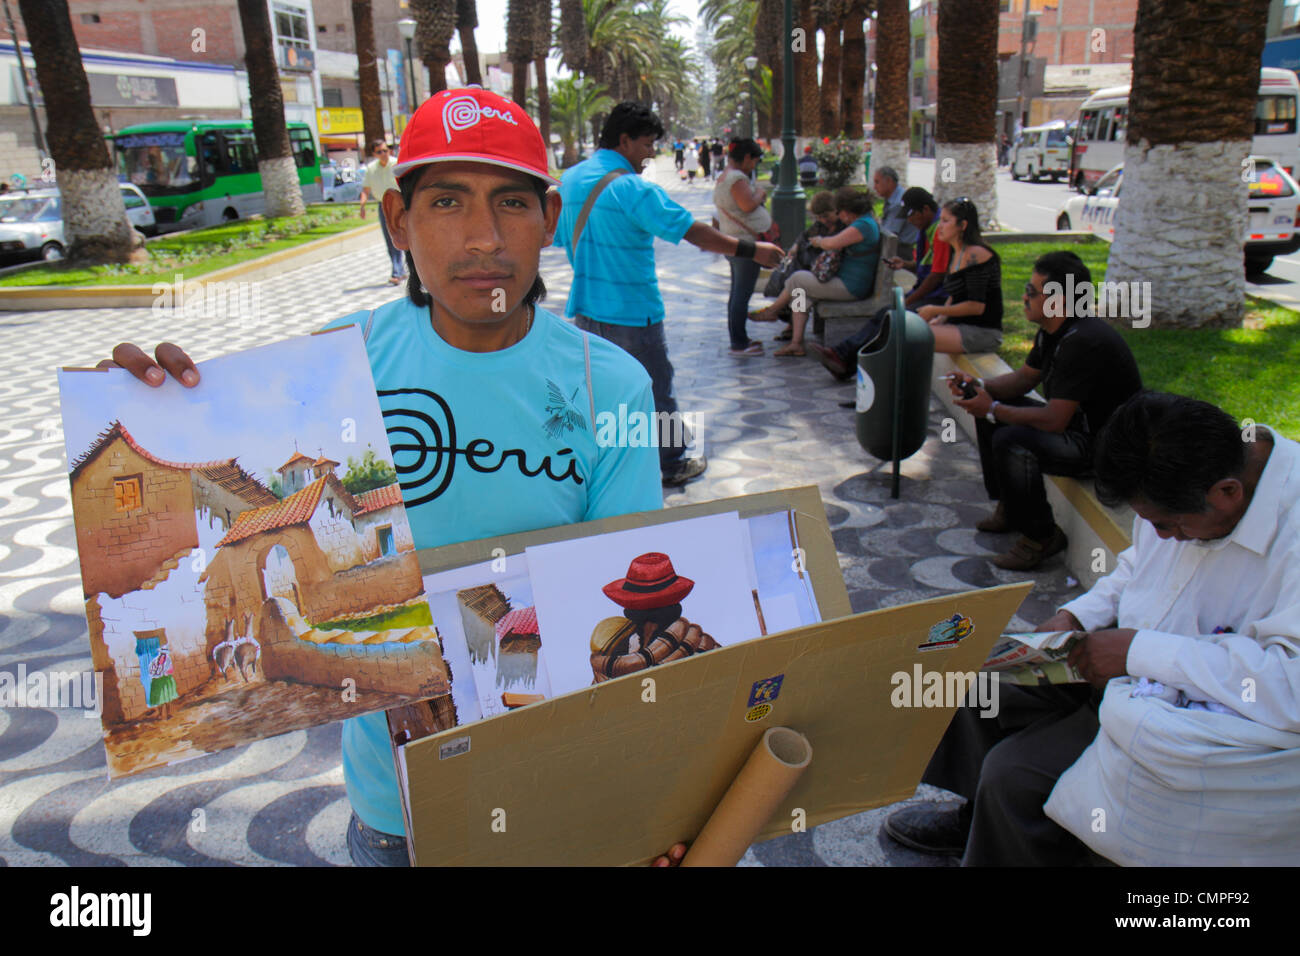 Tacna Peru,Avenida Bolognese,Parque de Locomotora,public park,promenade,street,vendor vendors stall stalls booth market marketplace,souvenir,Hispanic Stock Photo